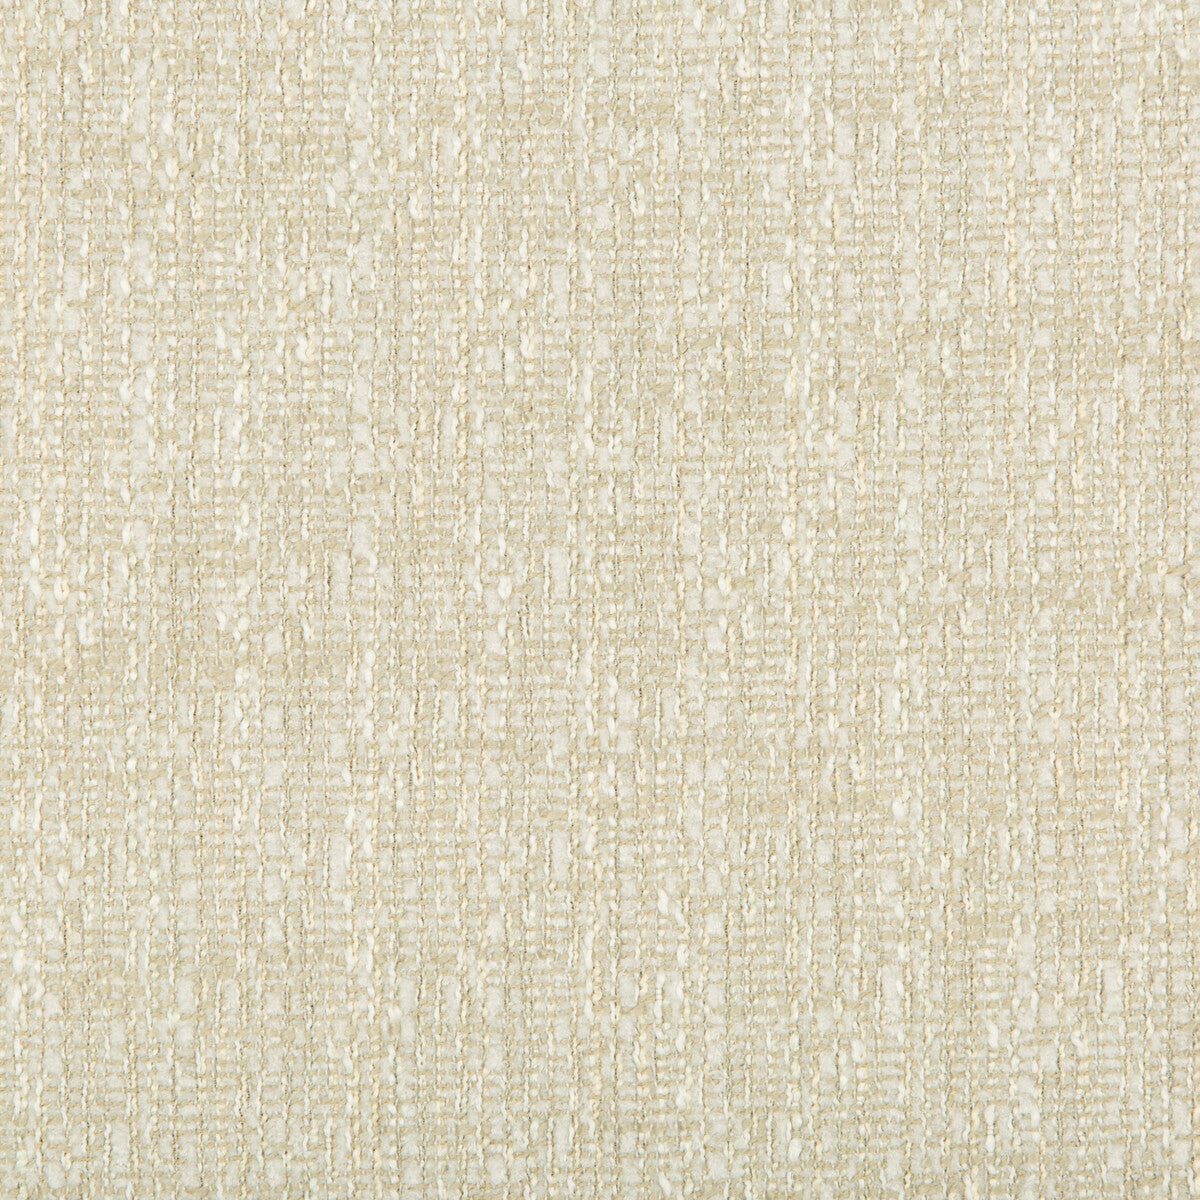 Kravet Smart fabric in 35320-116 color - pattern 35320.116.0 - by Kravet Smart in the Performance Kravetarmor collection